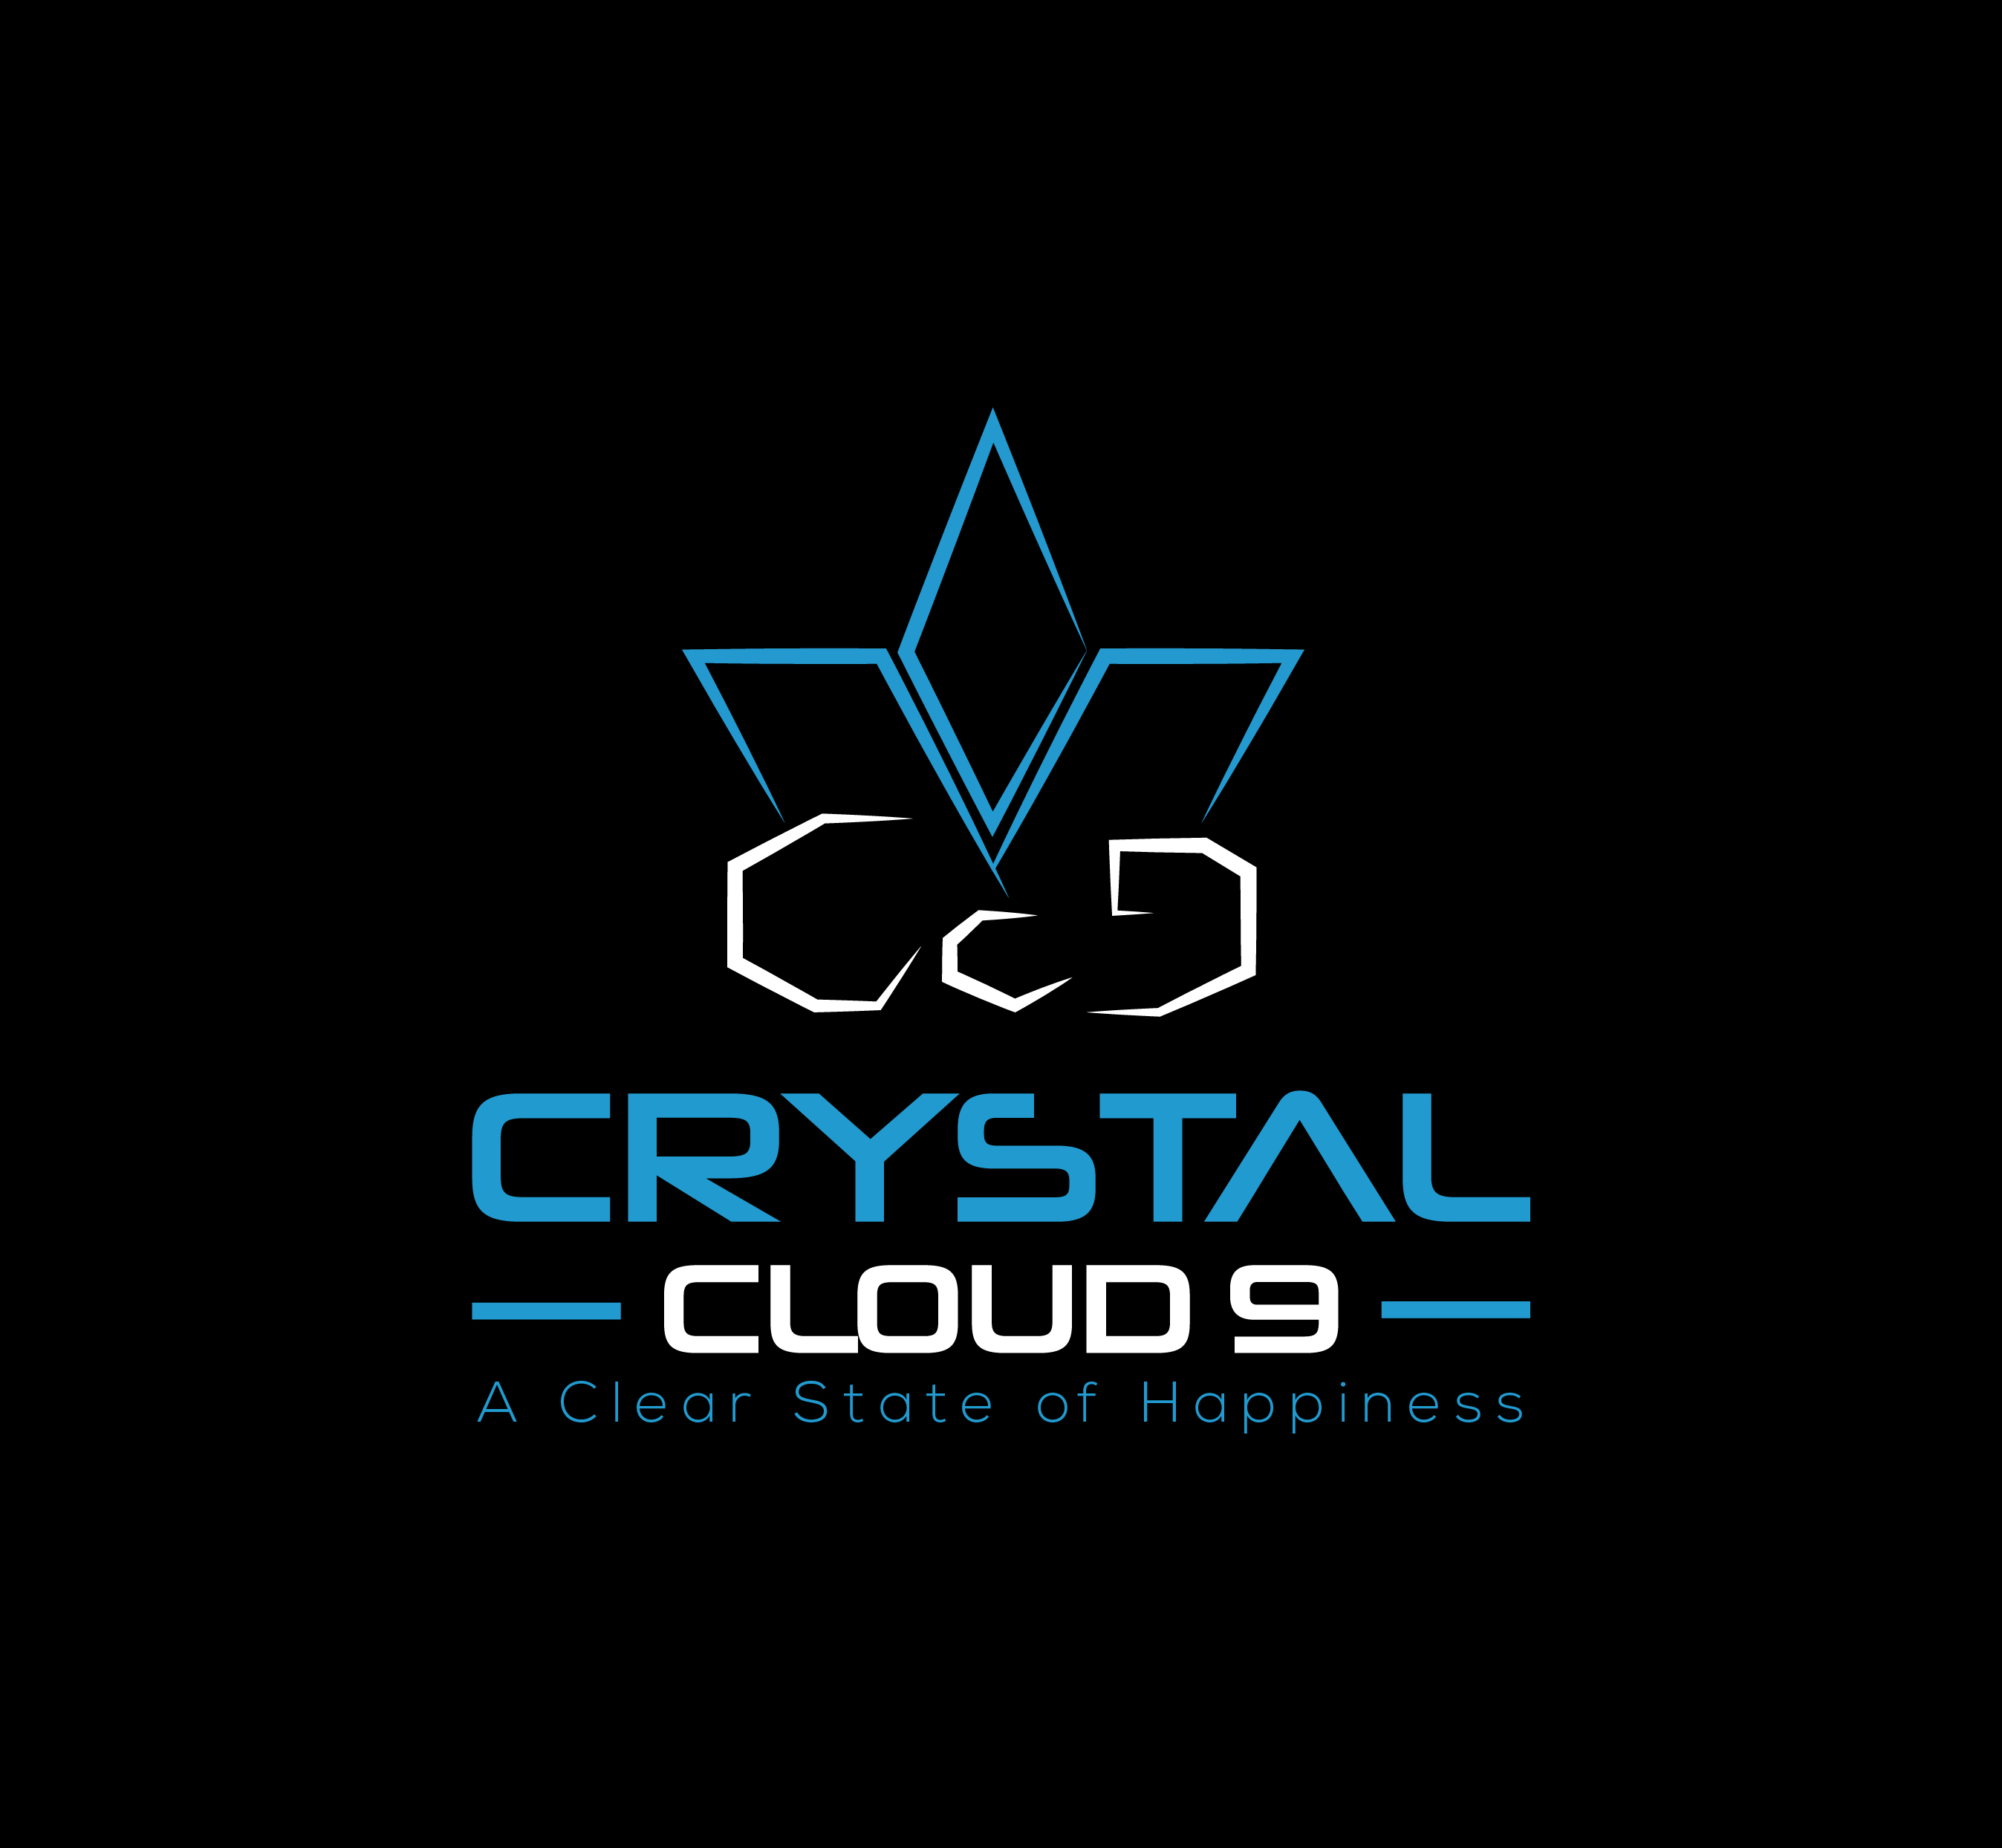 CrystalCloud9